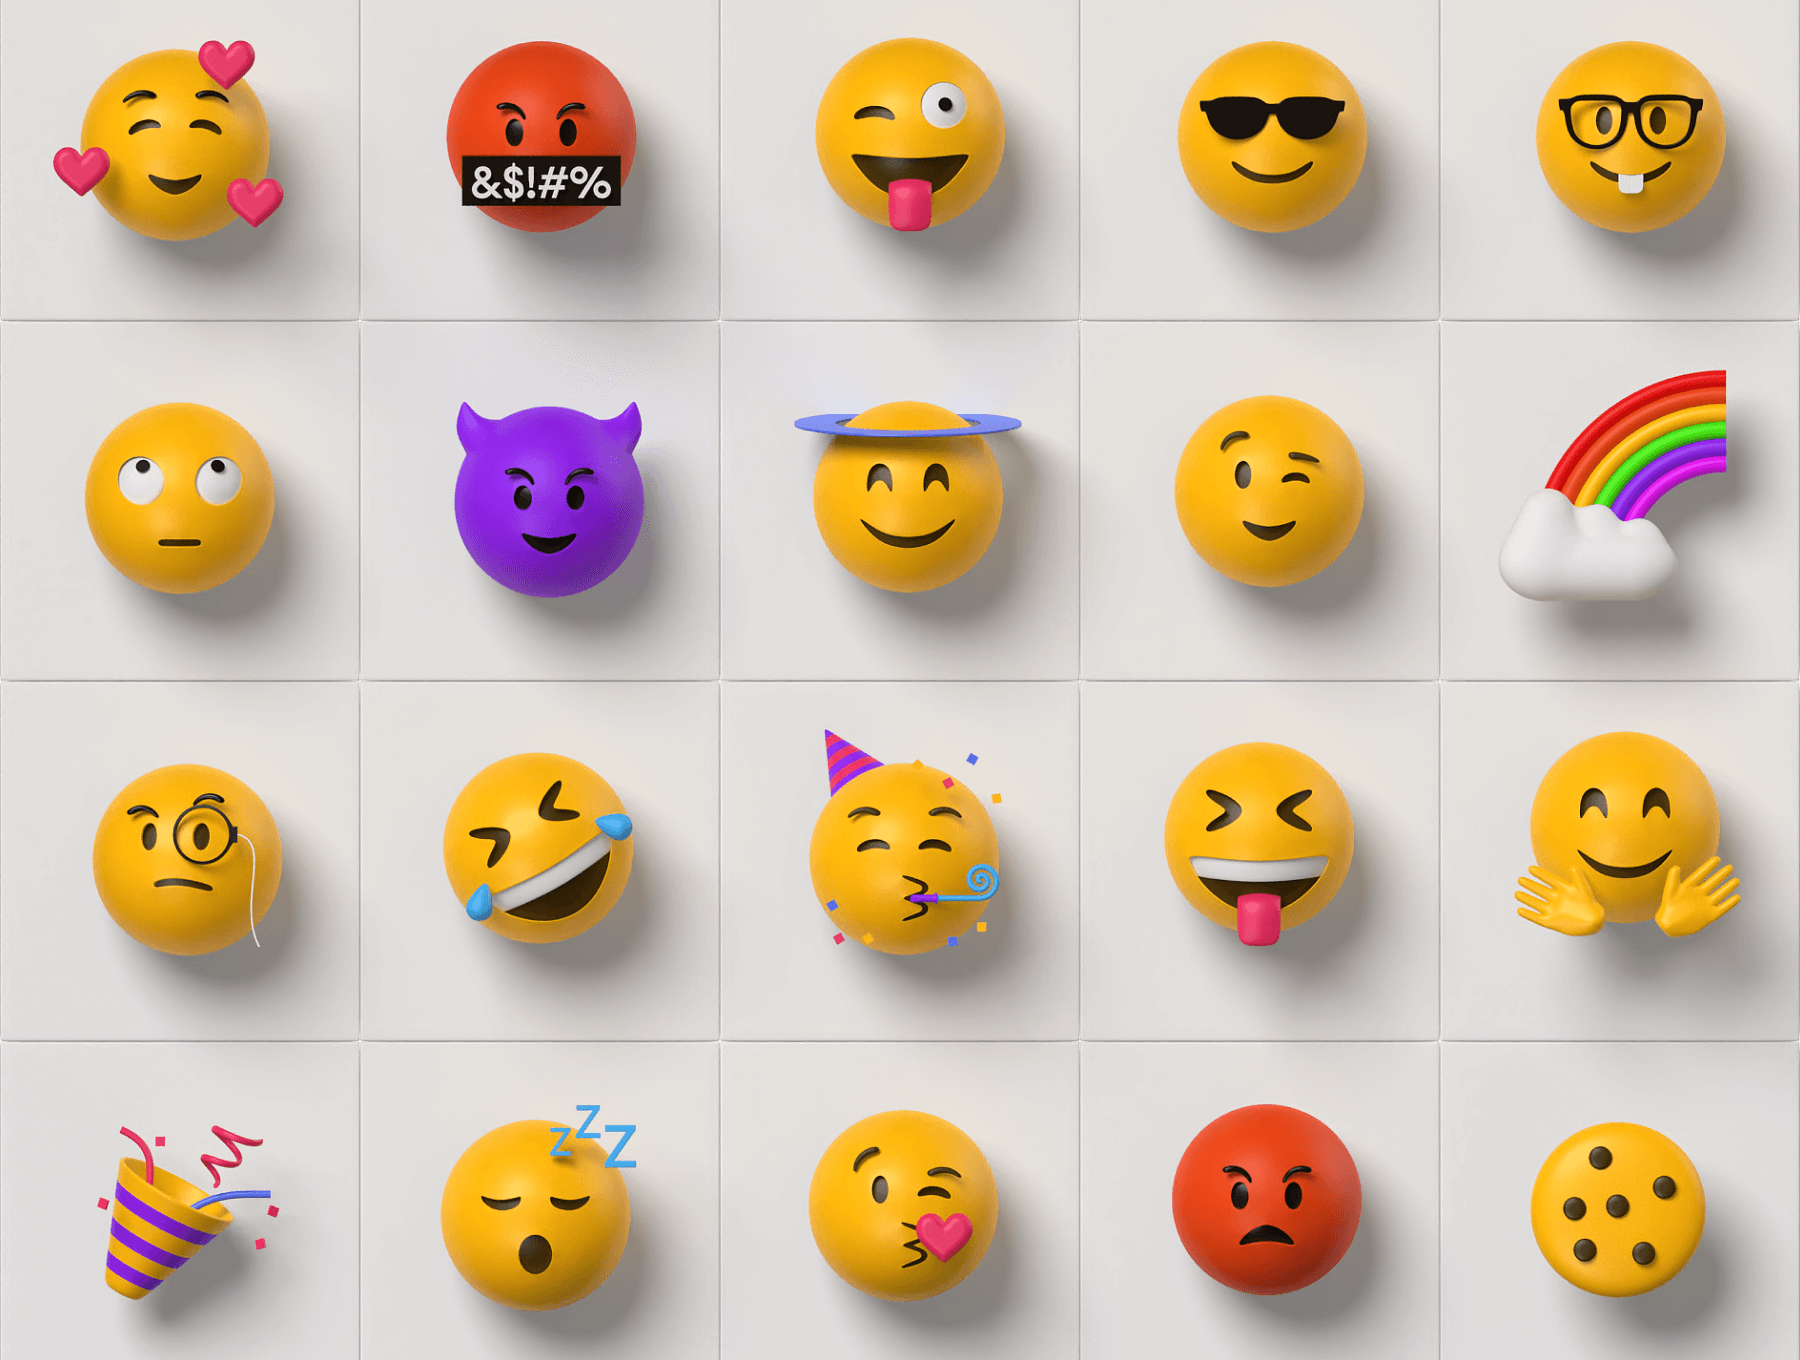 Free Printable Emoji Faces - 44 Awesome Printable Emojis ...